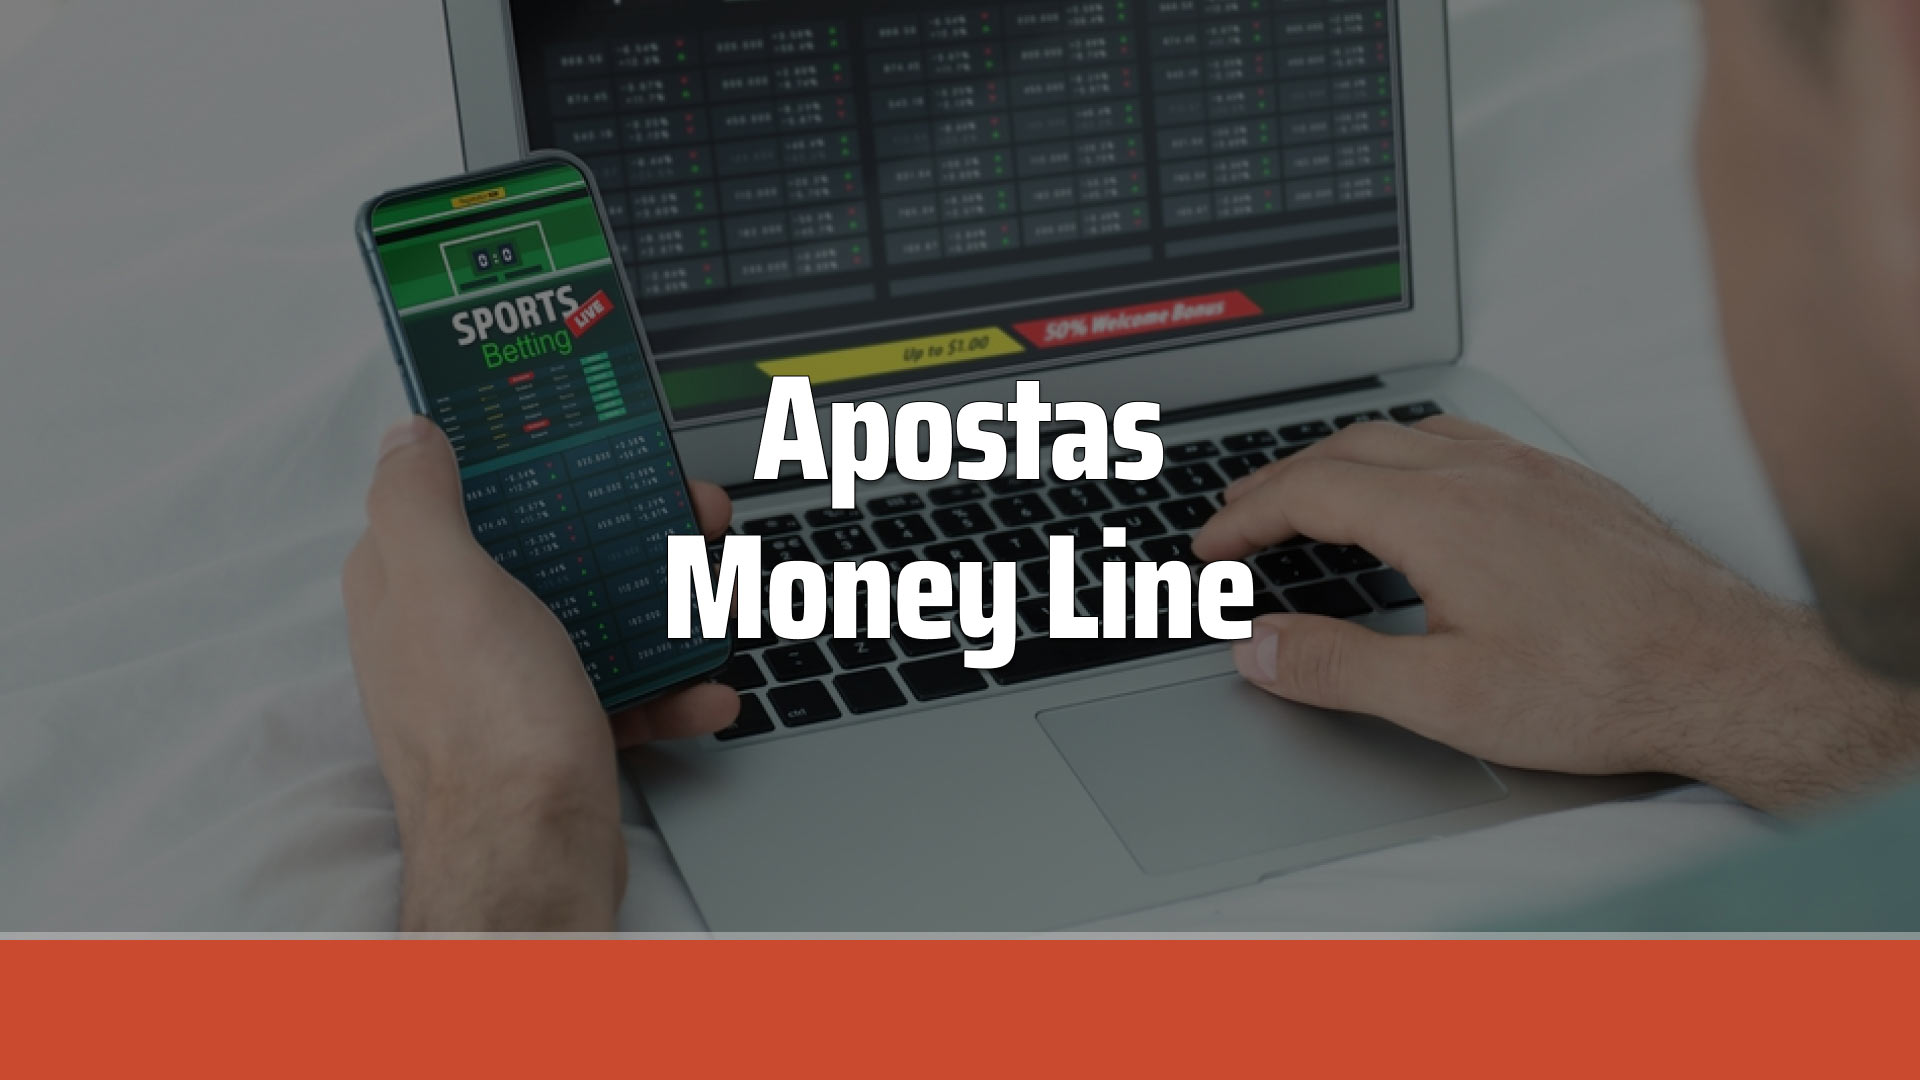 Apostas Money Line